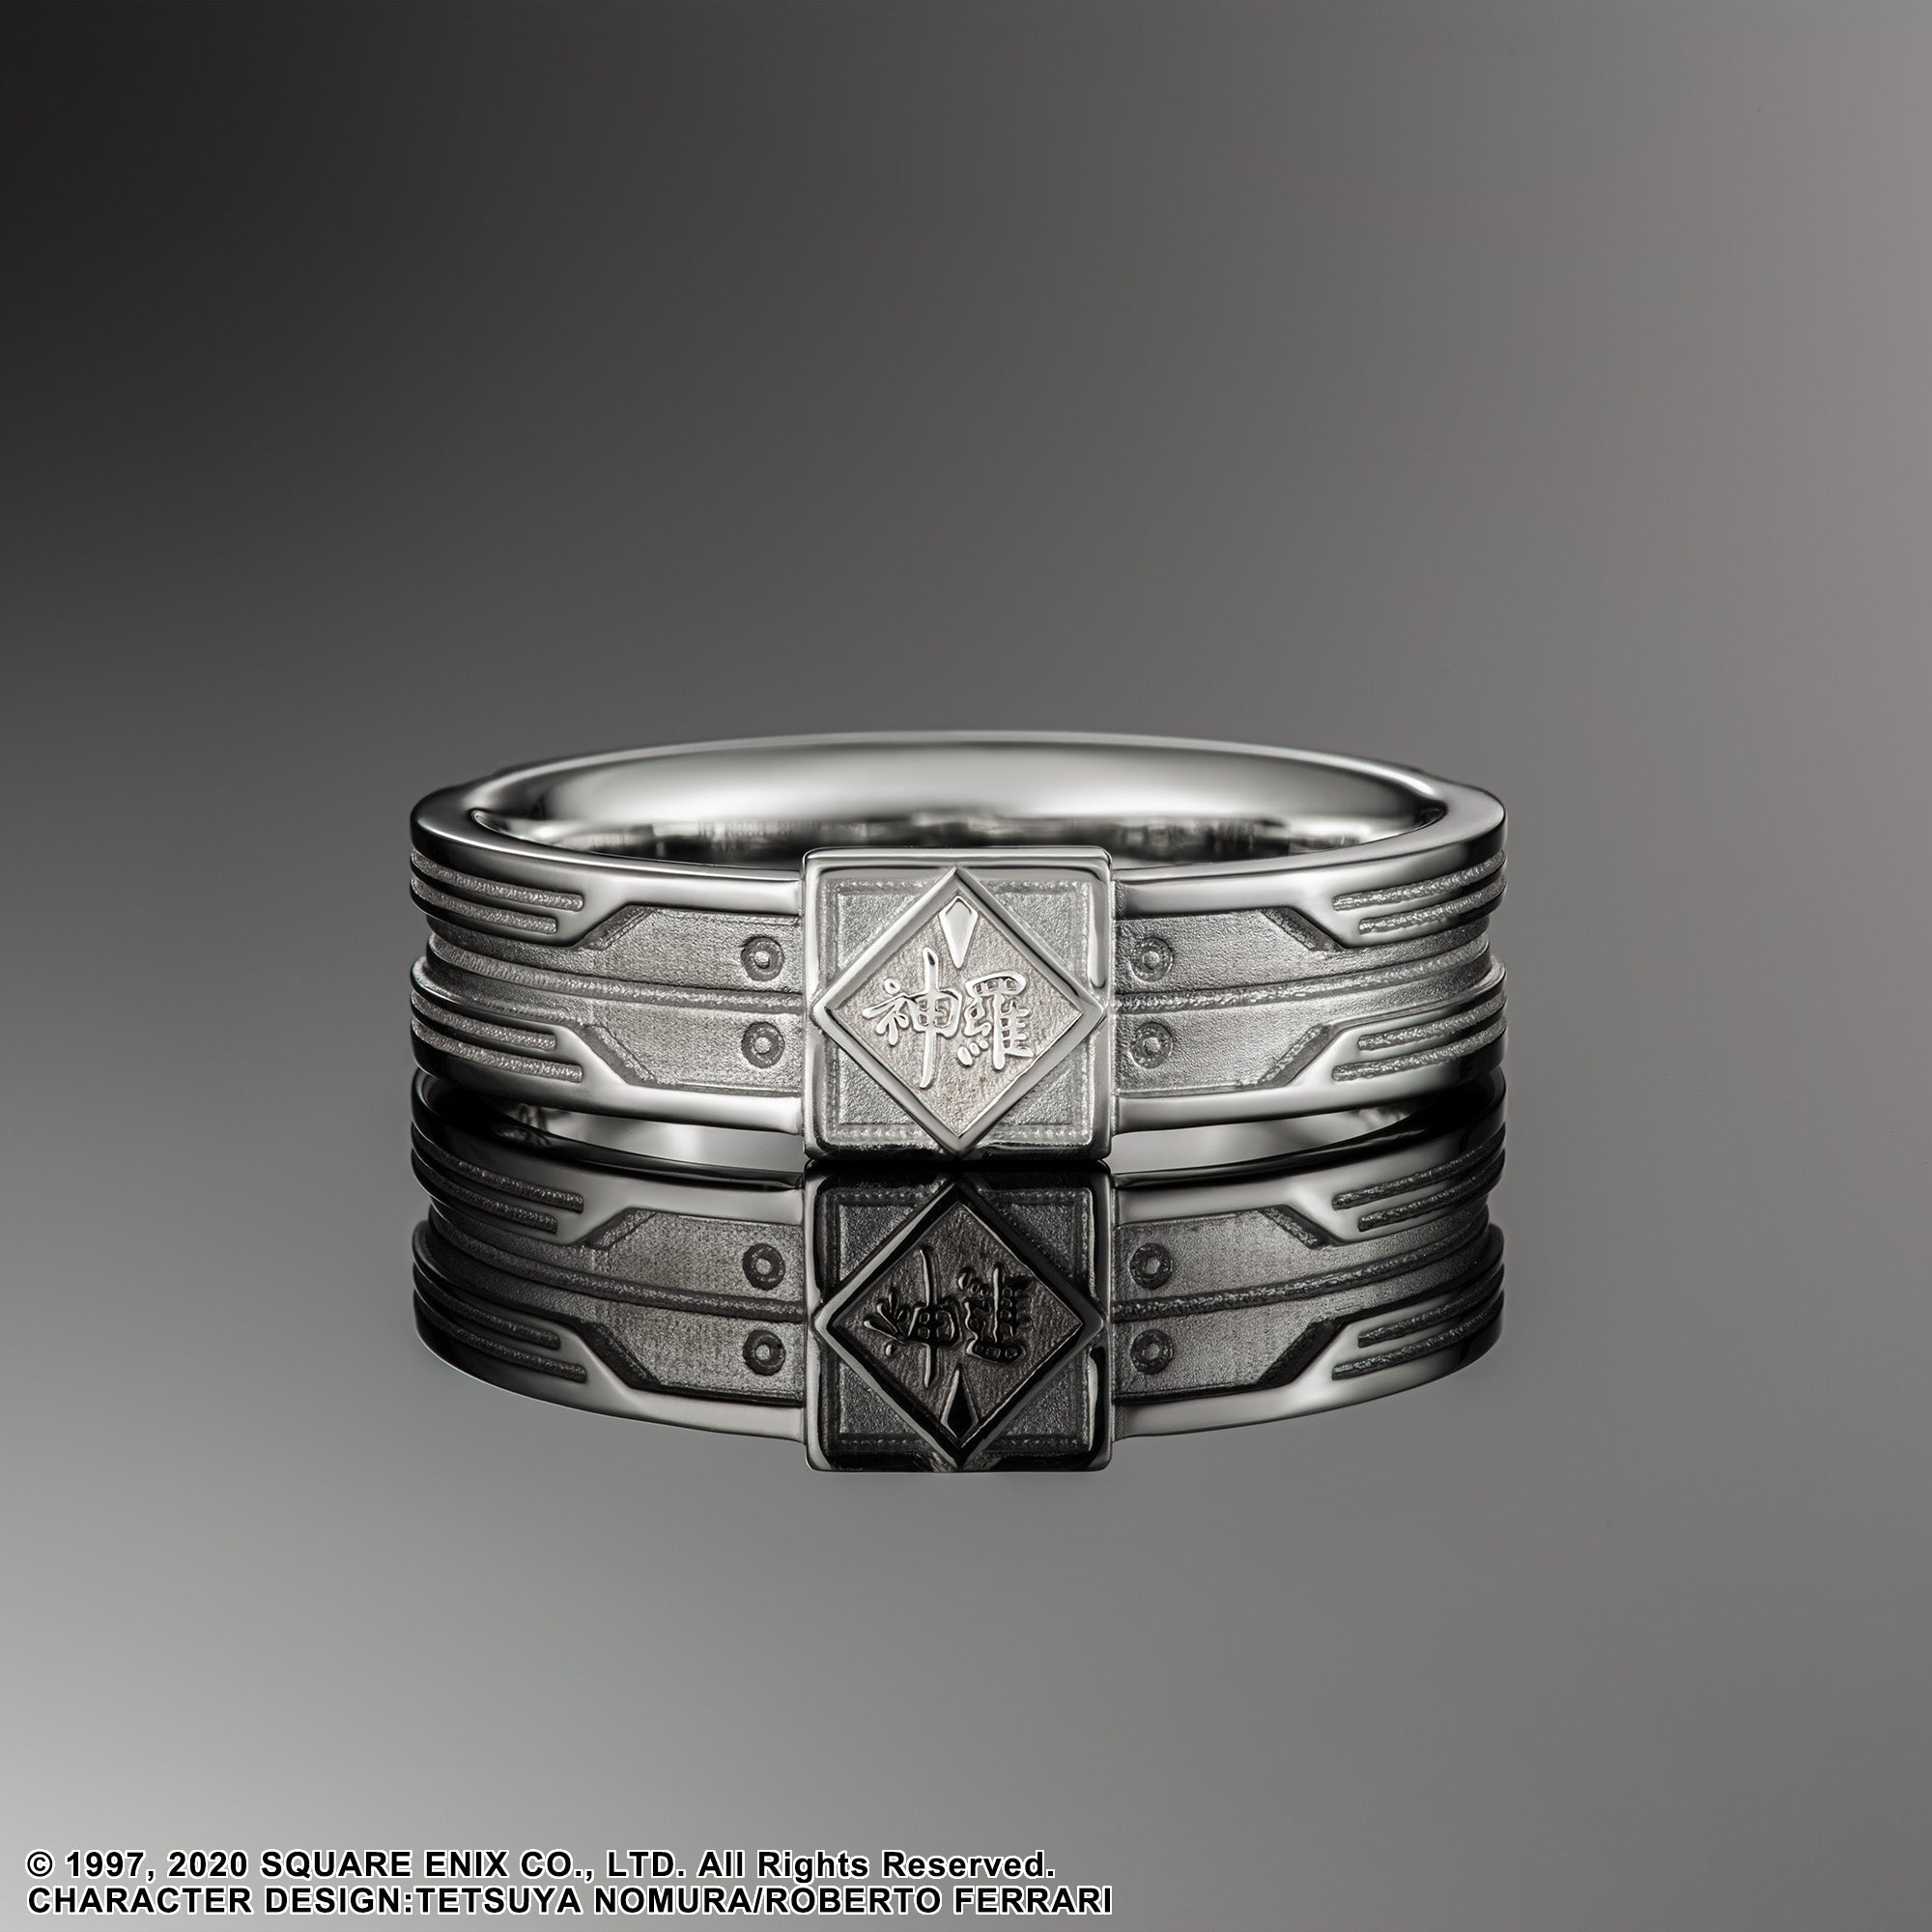 FINAL FANTASY VII Silver Ring SHINRA MATERIA TYPE A (Emerald + Blue Sapphire) Size 21